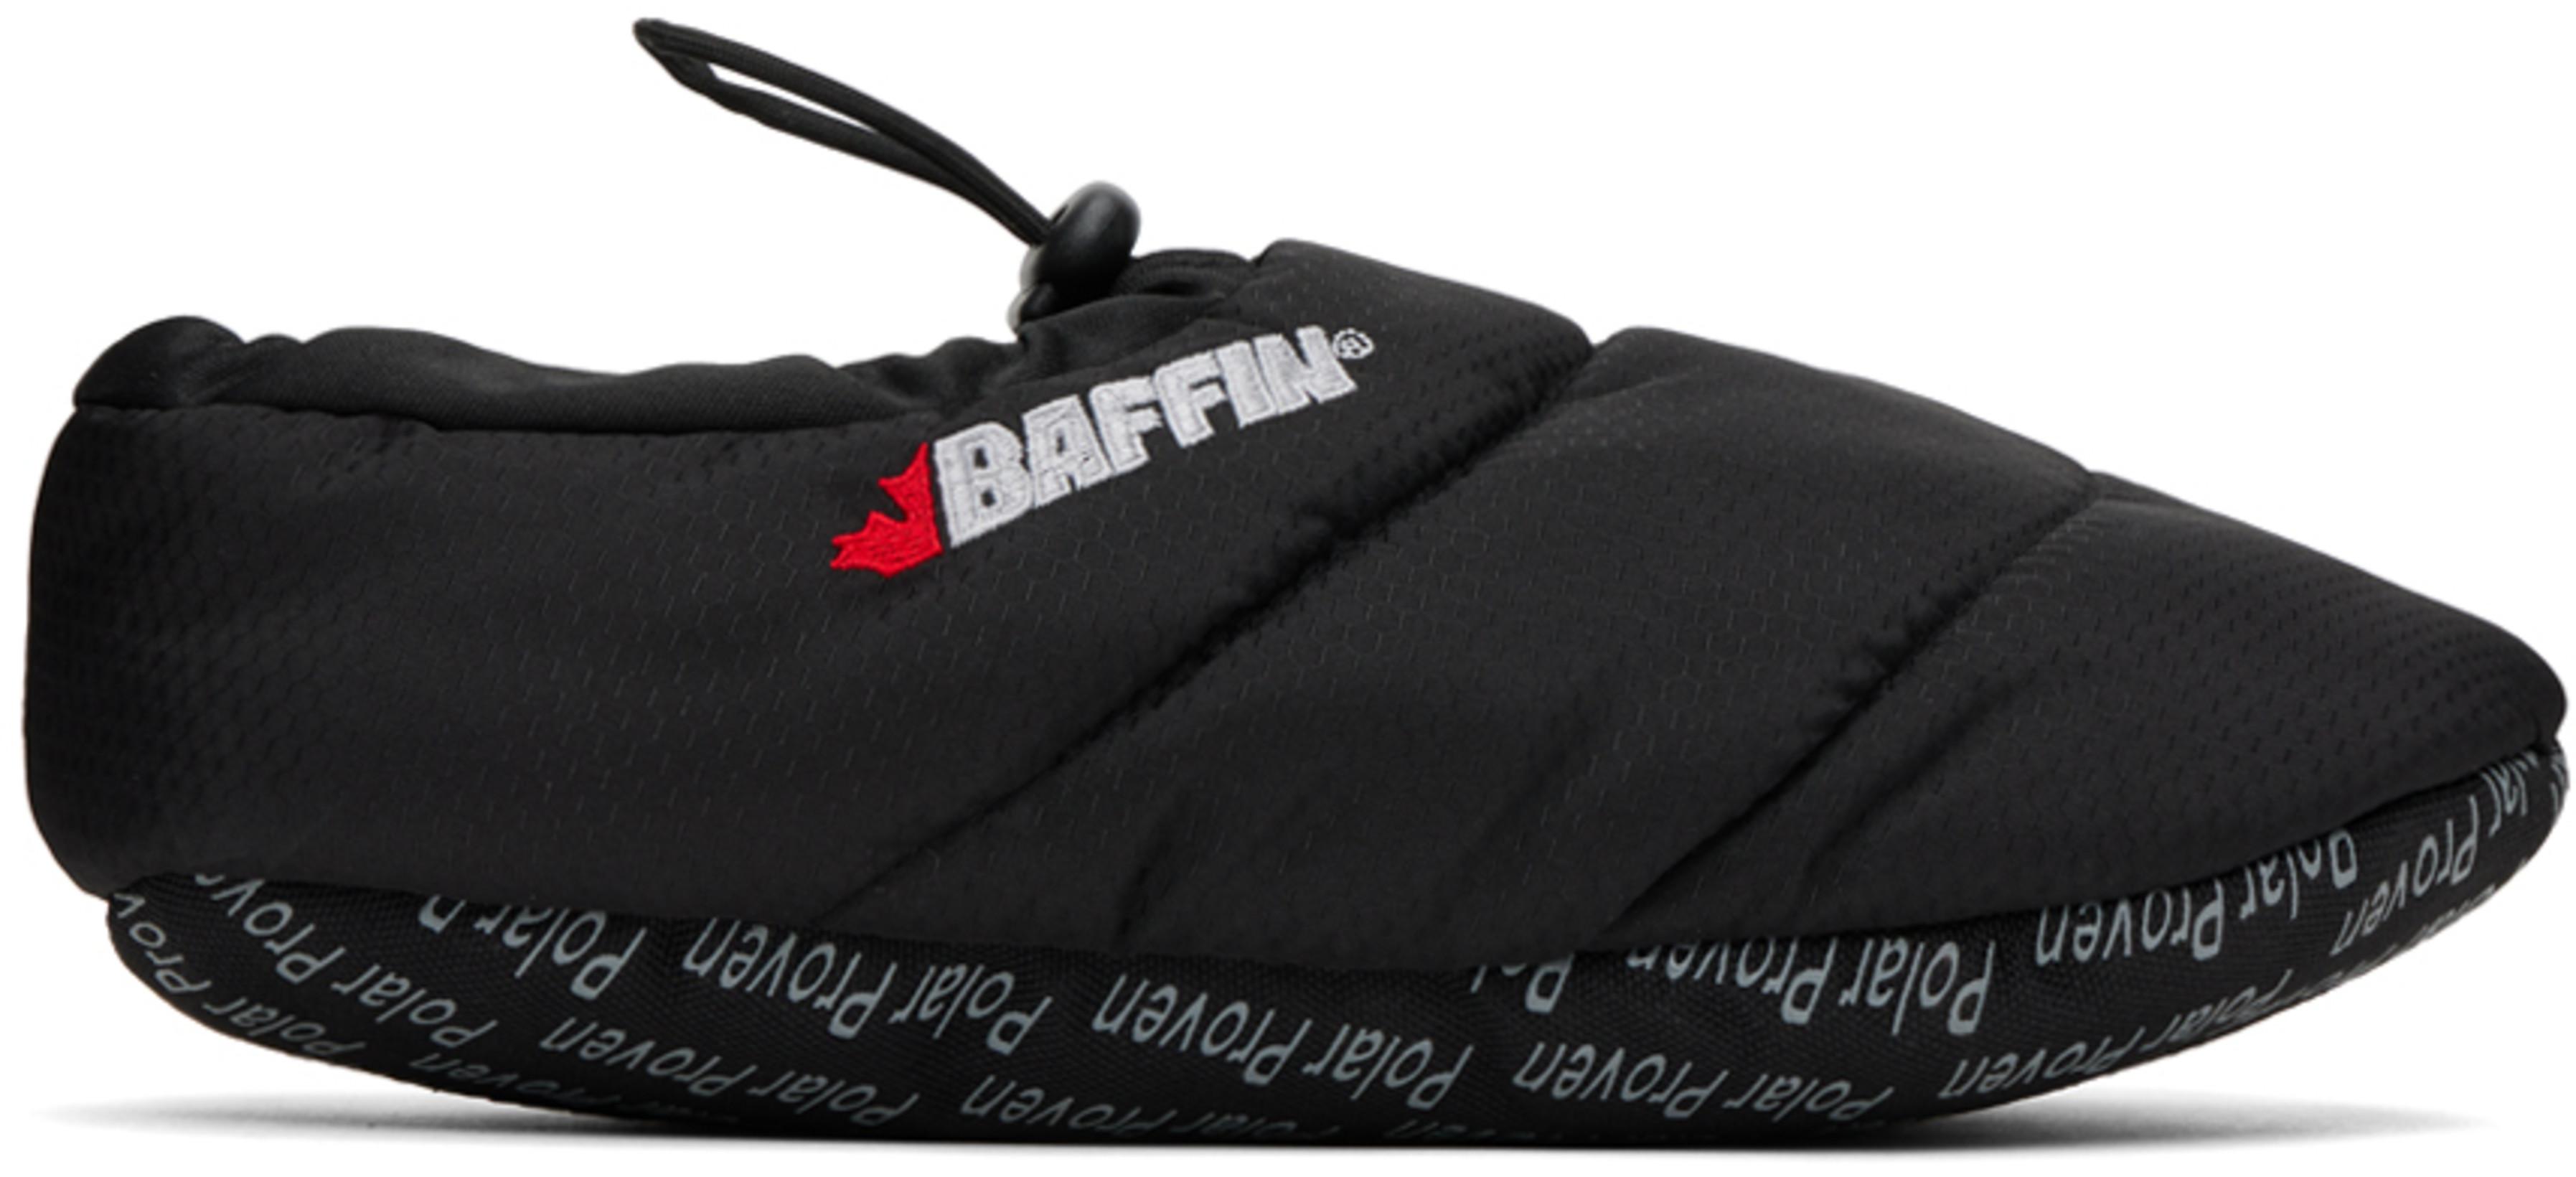 Black Cush Slippers by BAFFIN